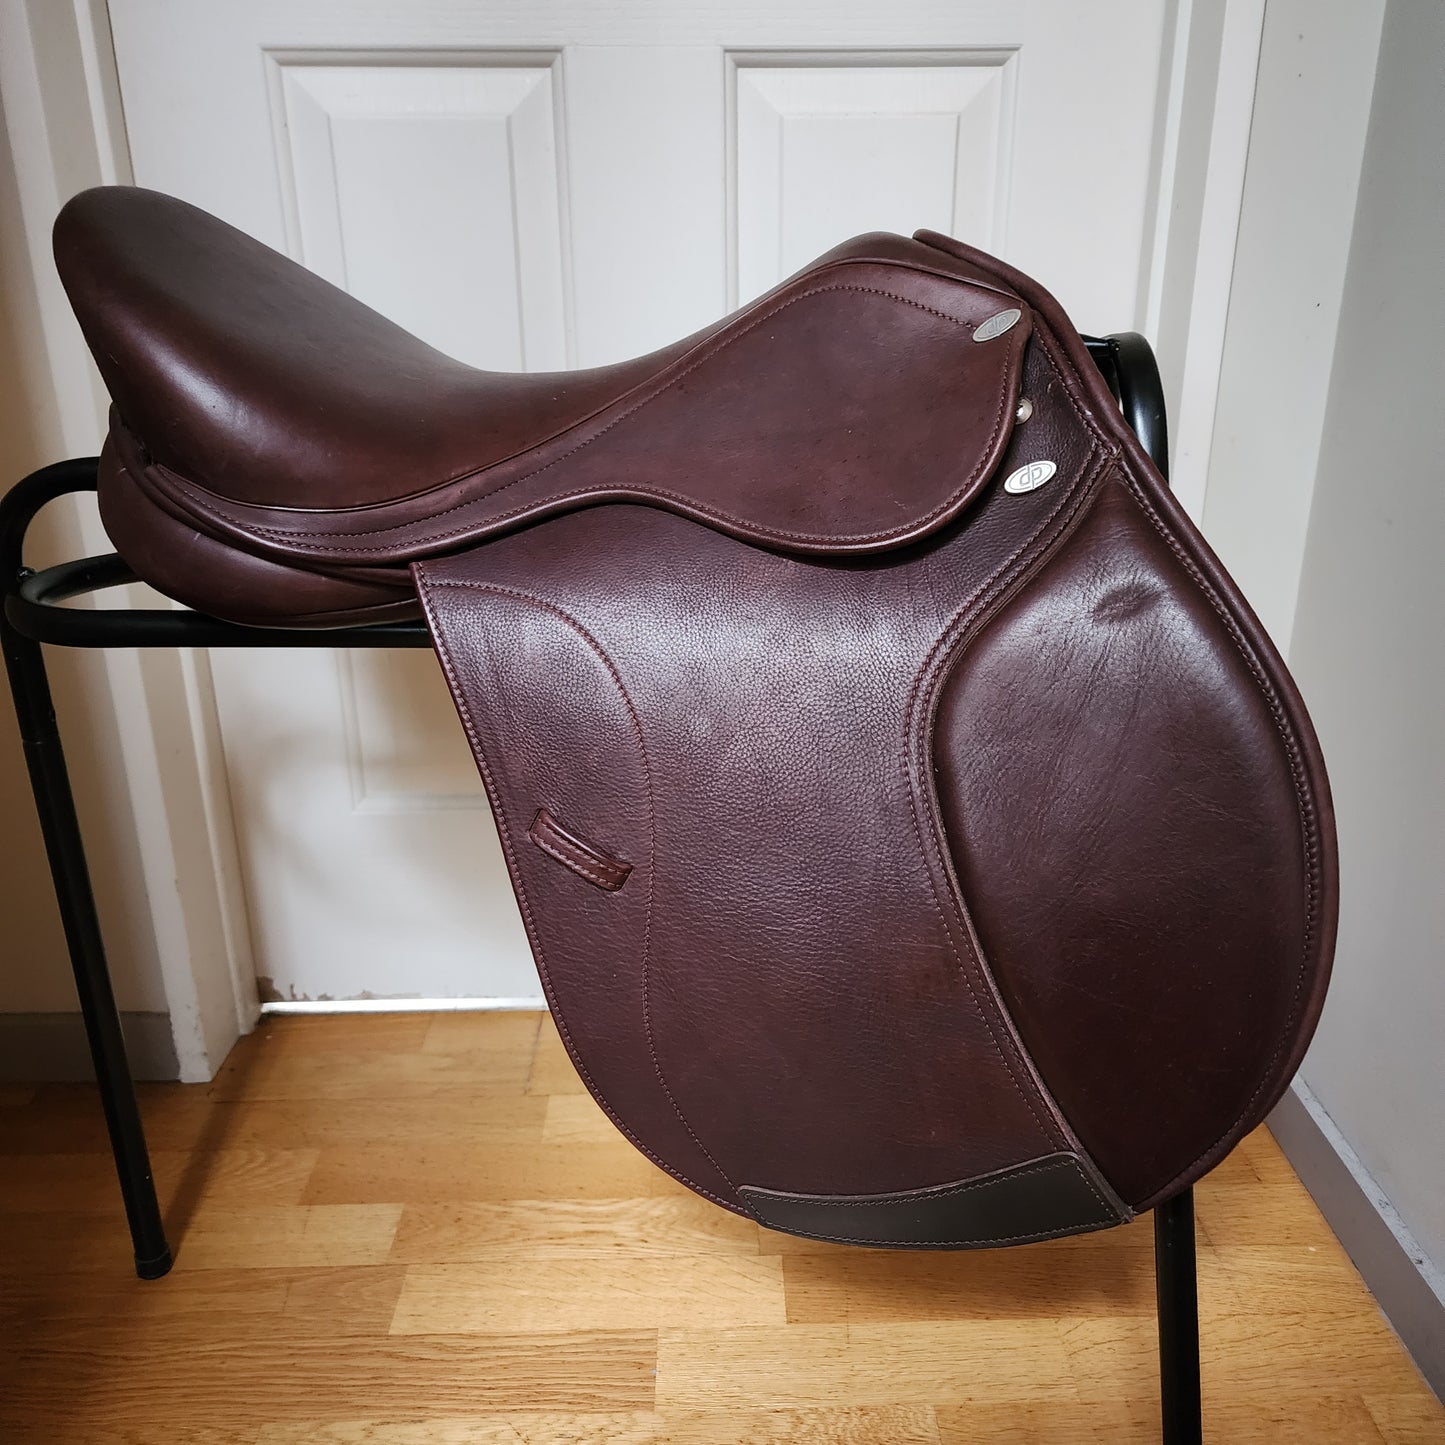 DP brown leather GP saddle 17"